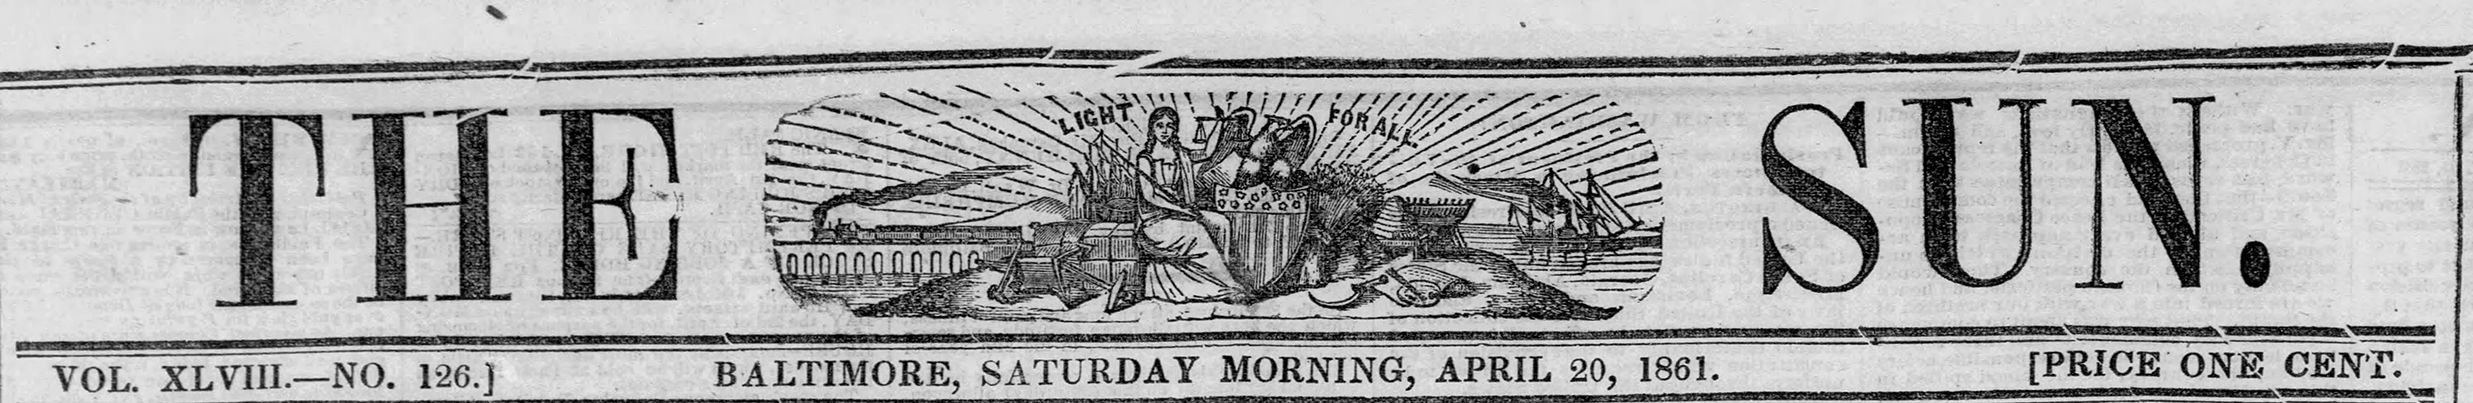 The Baltimore Sun Sat Apr 20 1861 72